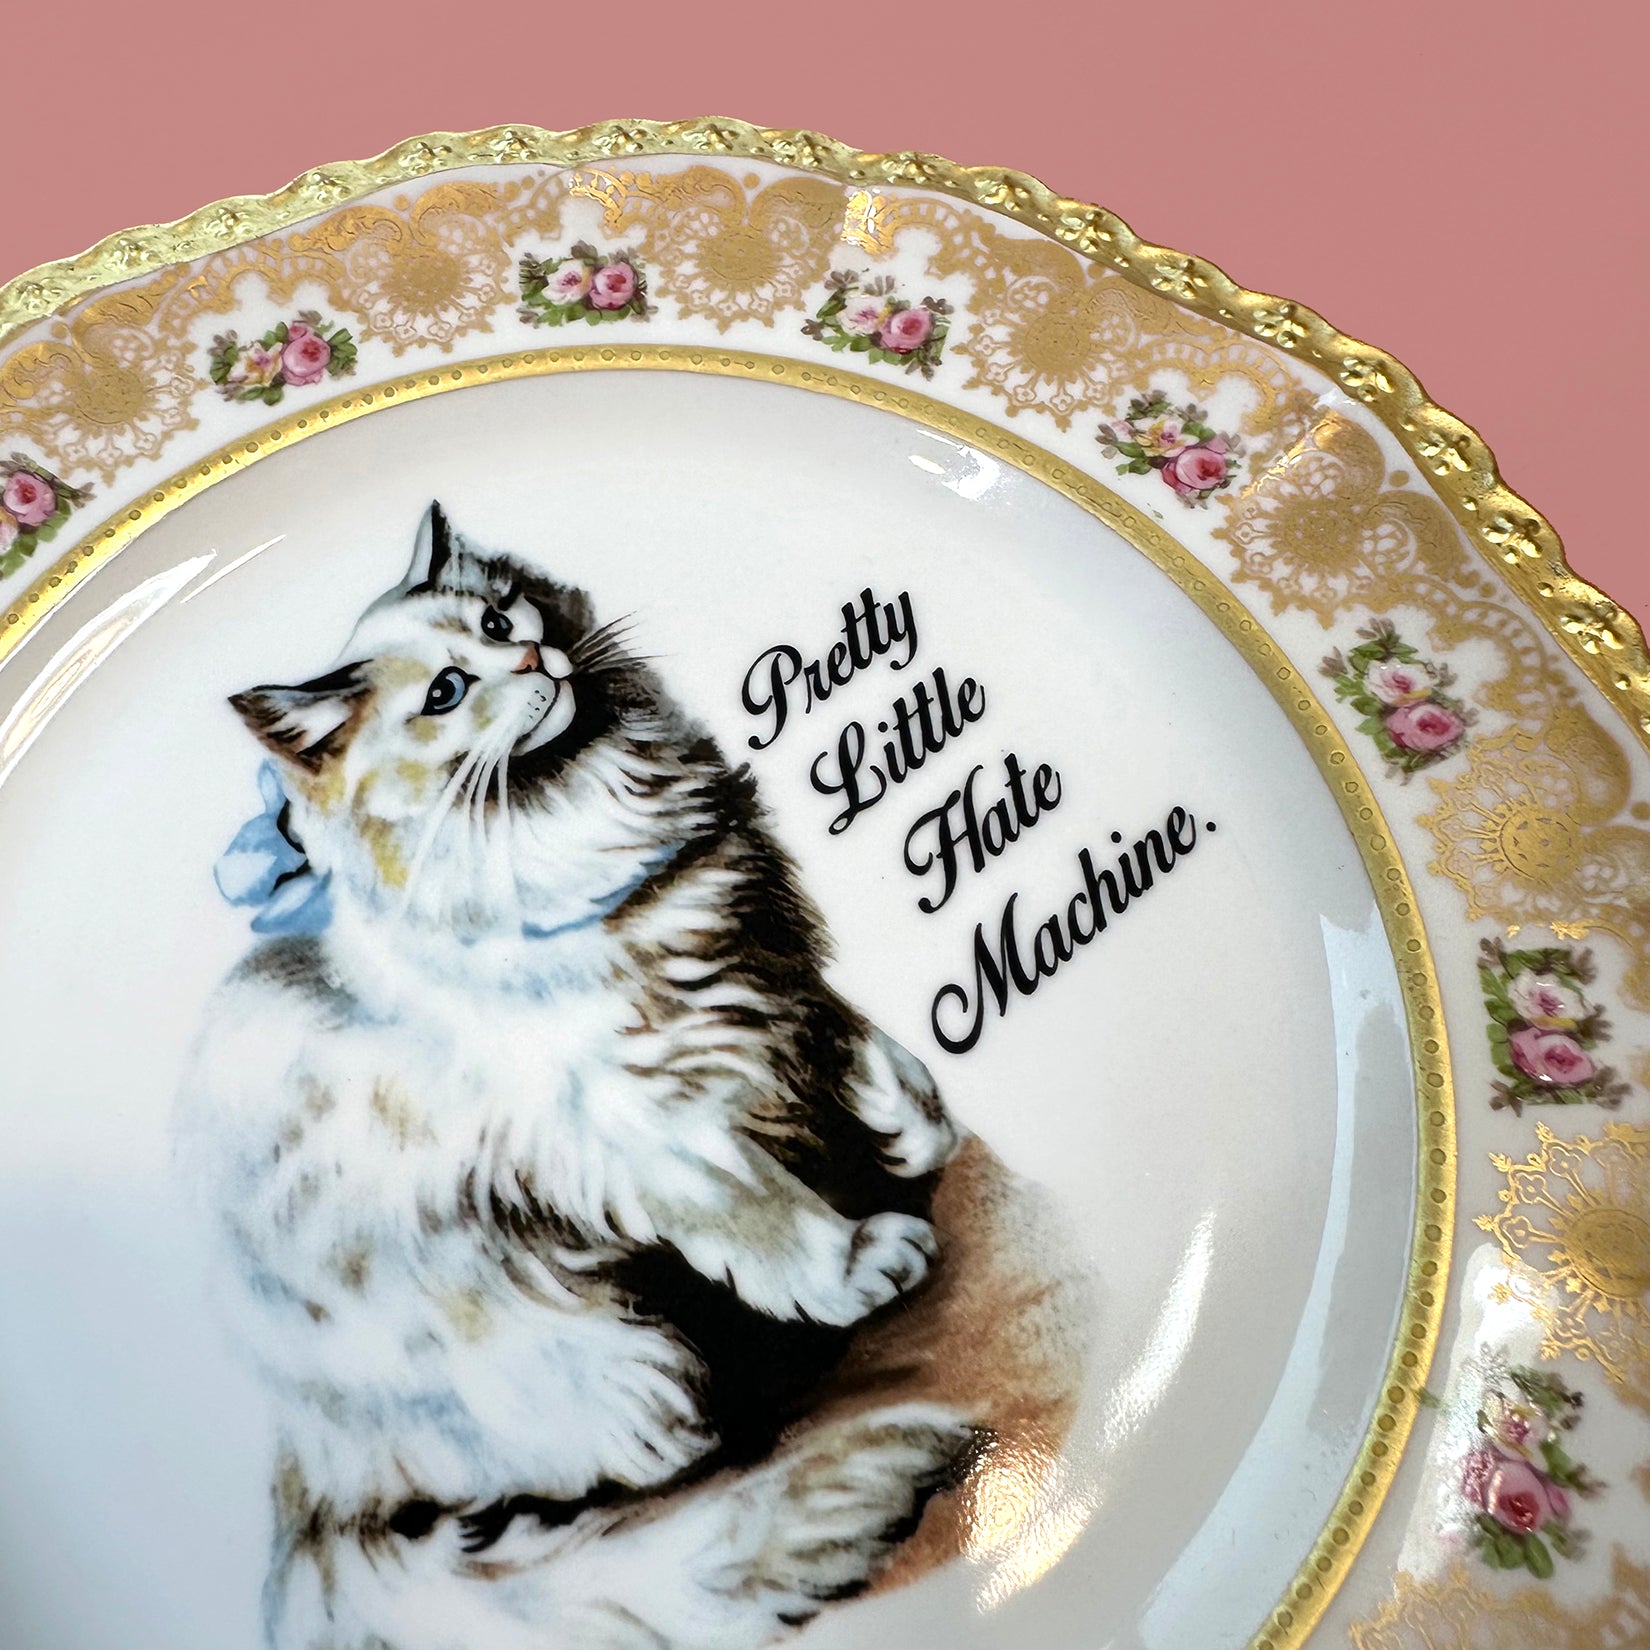 Vintage Art Plate - Medium Cat plate - "Pretty Little Hate Machine."